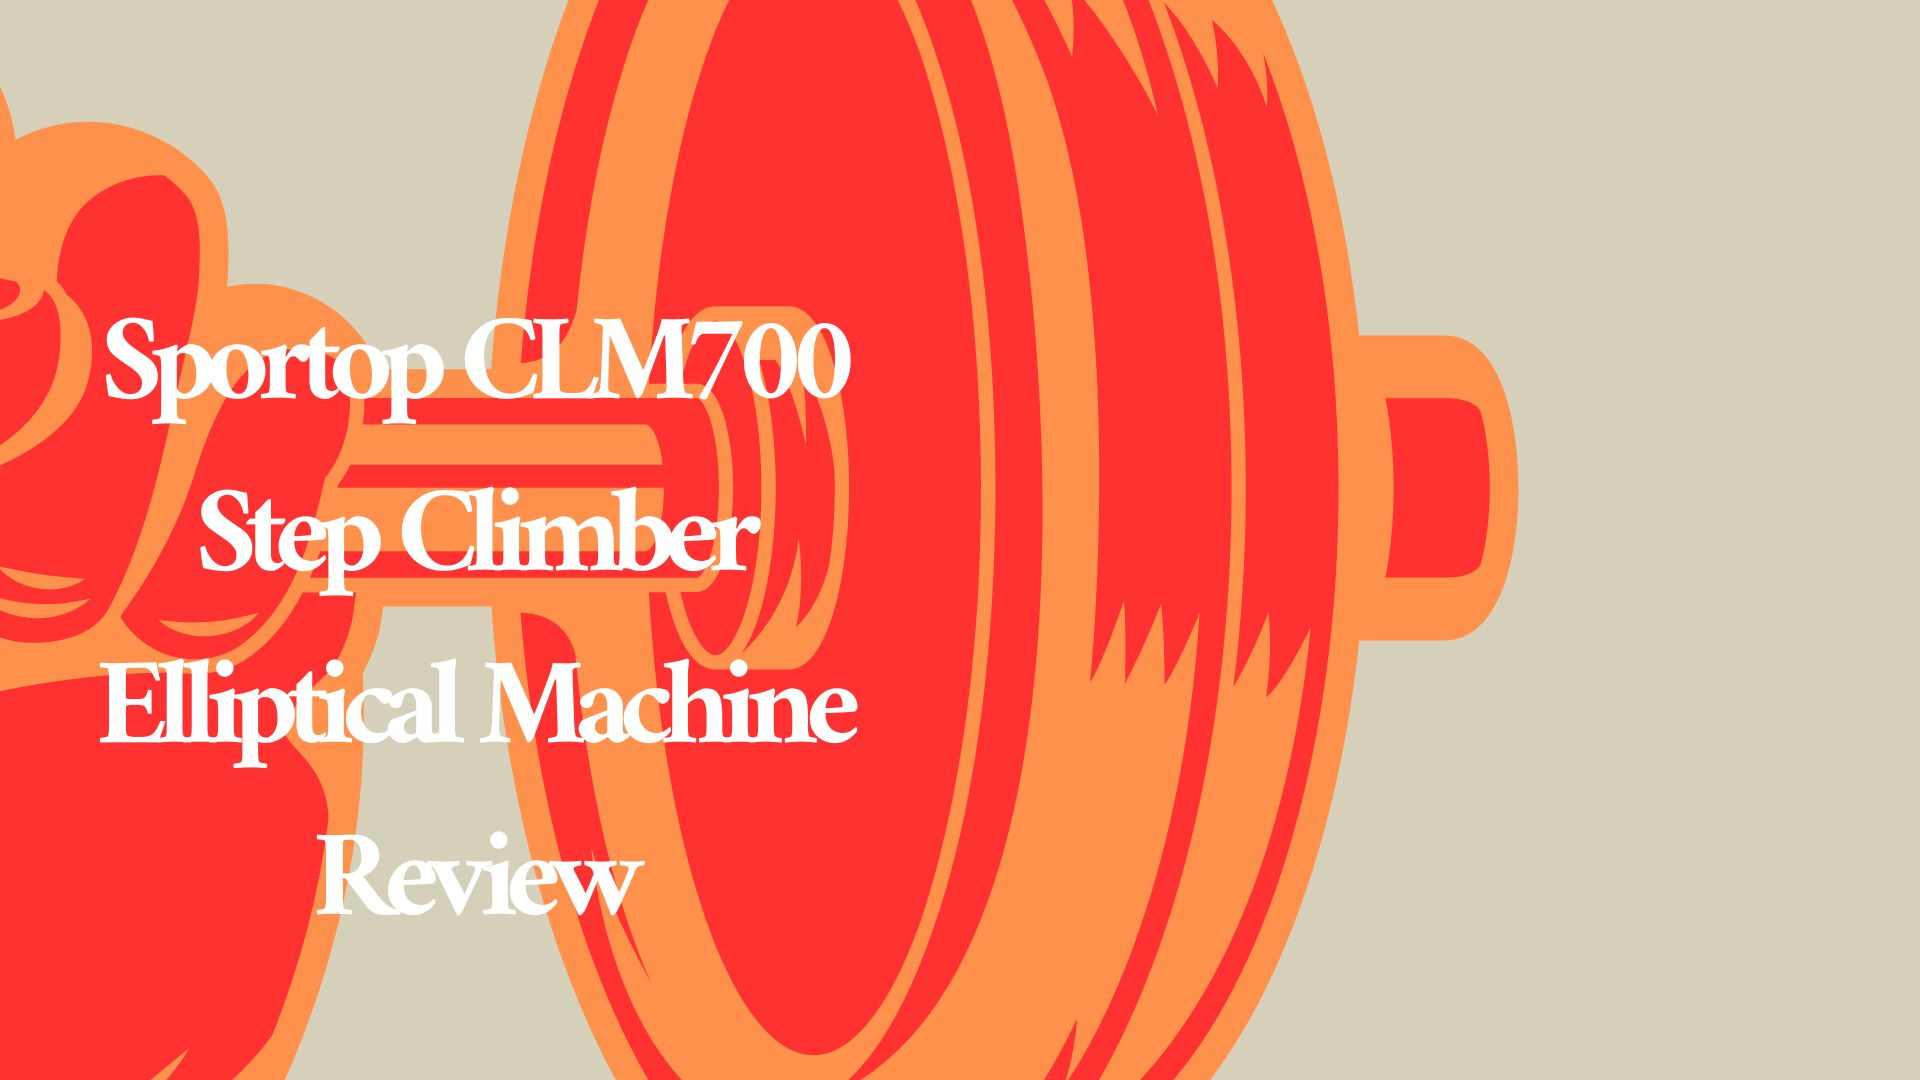 Sportop CLM700 Step Climber Elliptical Machine Review